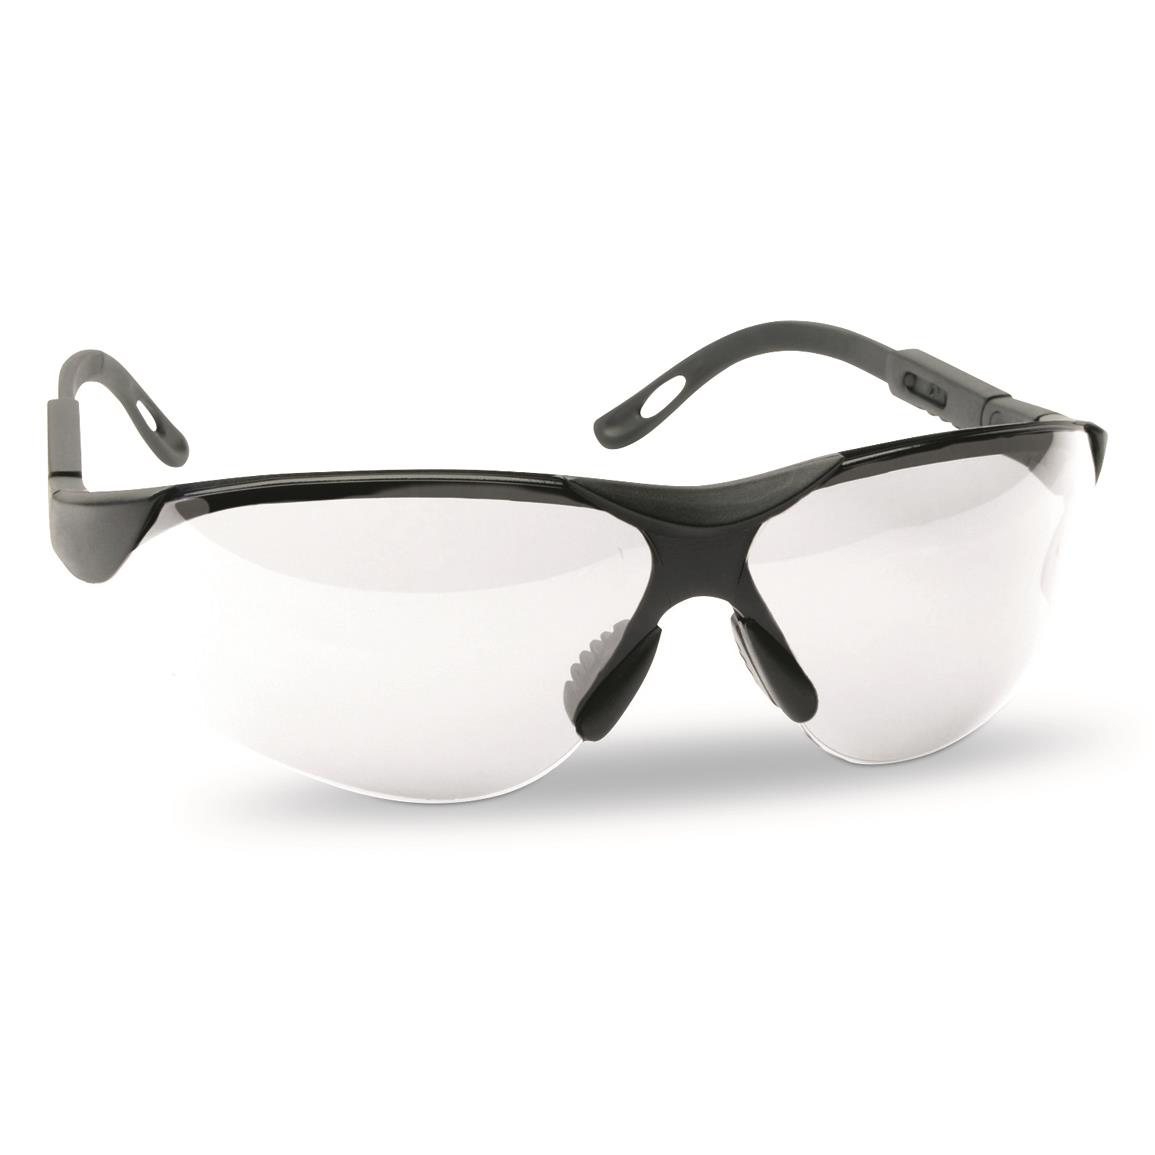 Walker S Elite Shooting Glasses 705154 Sunglasses And Eyewear At Sportsman S Guide